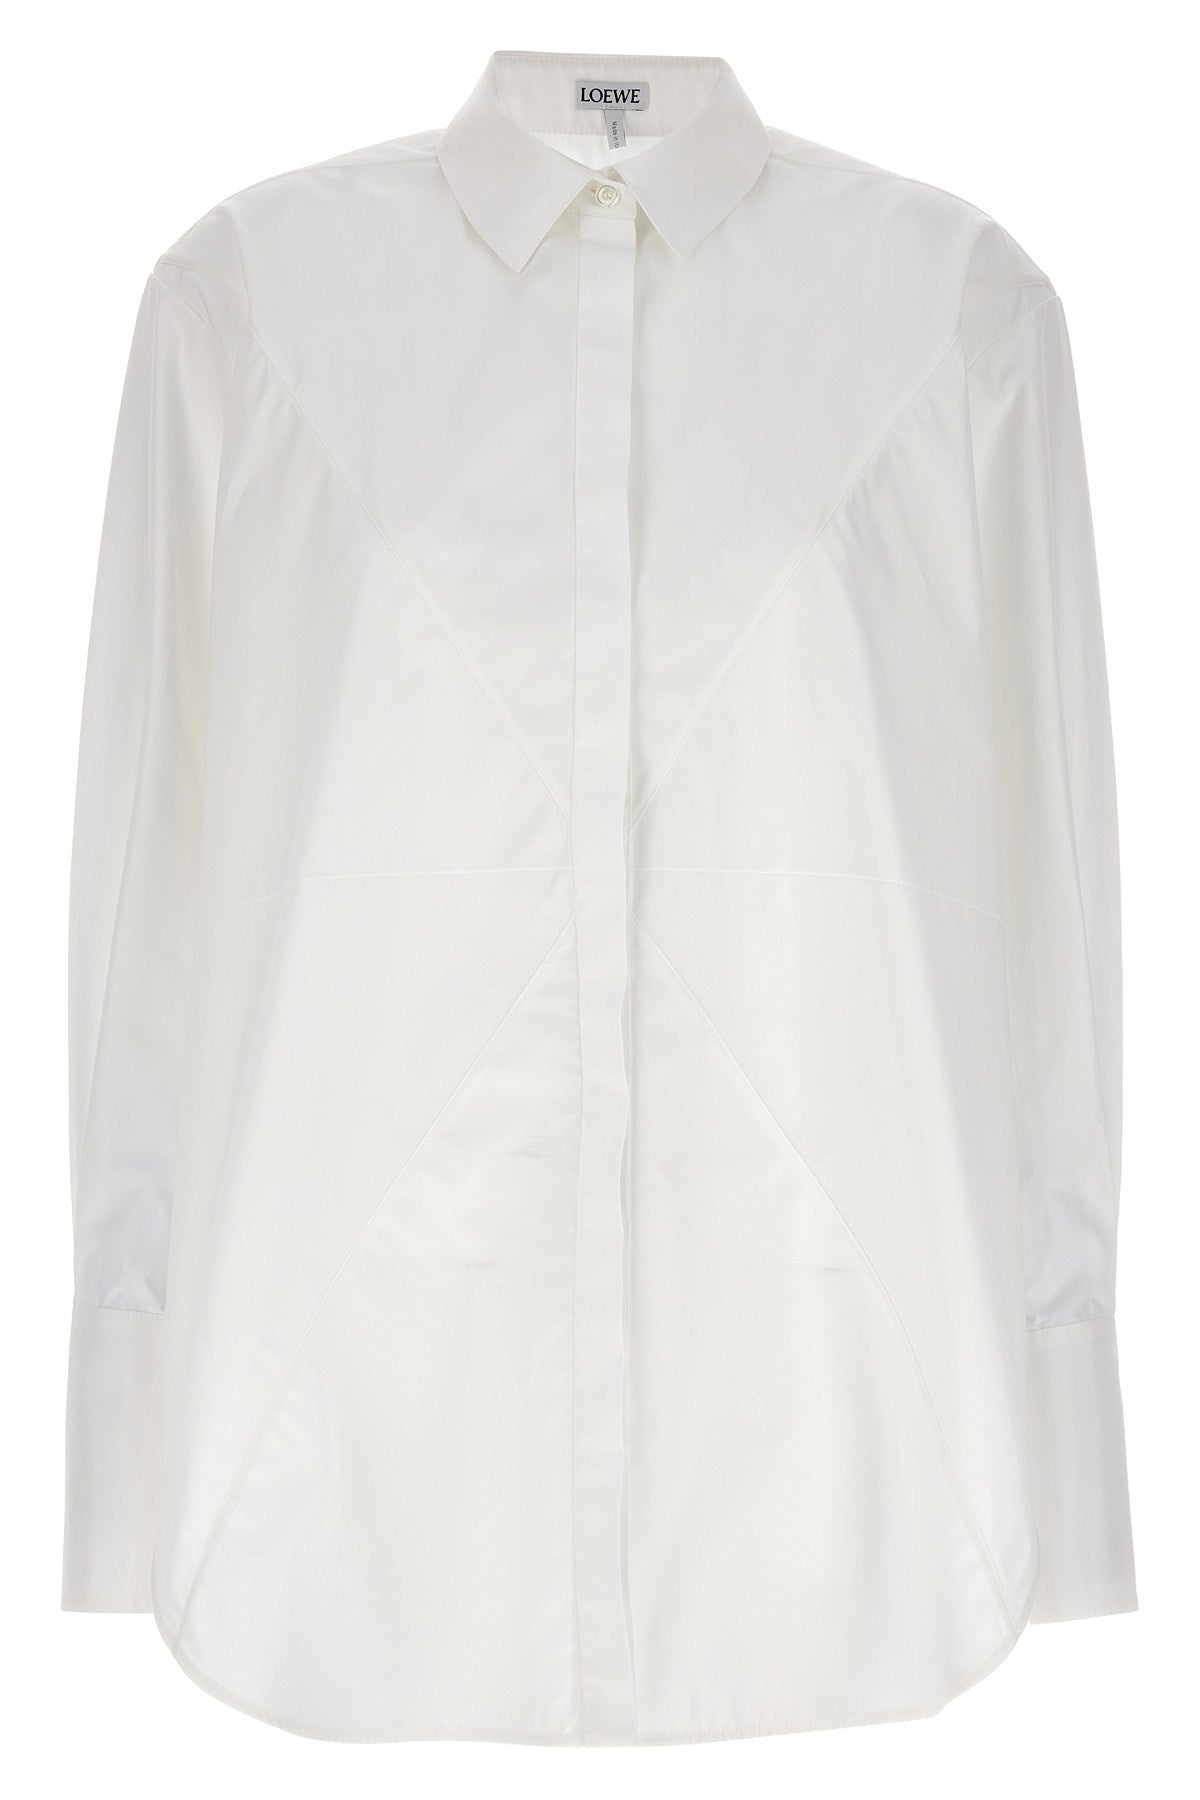 Loewe Women 'puzzle Fold' Shirt In White